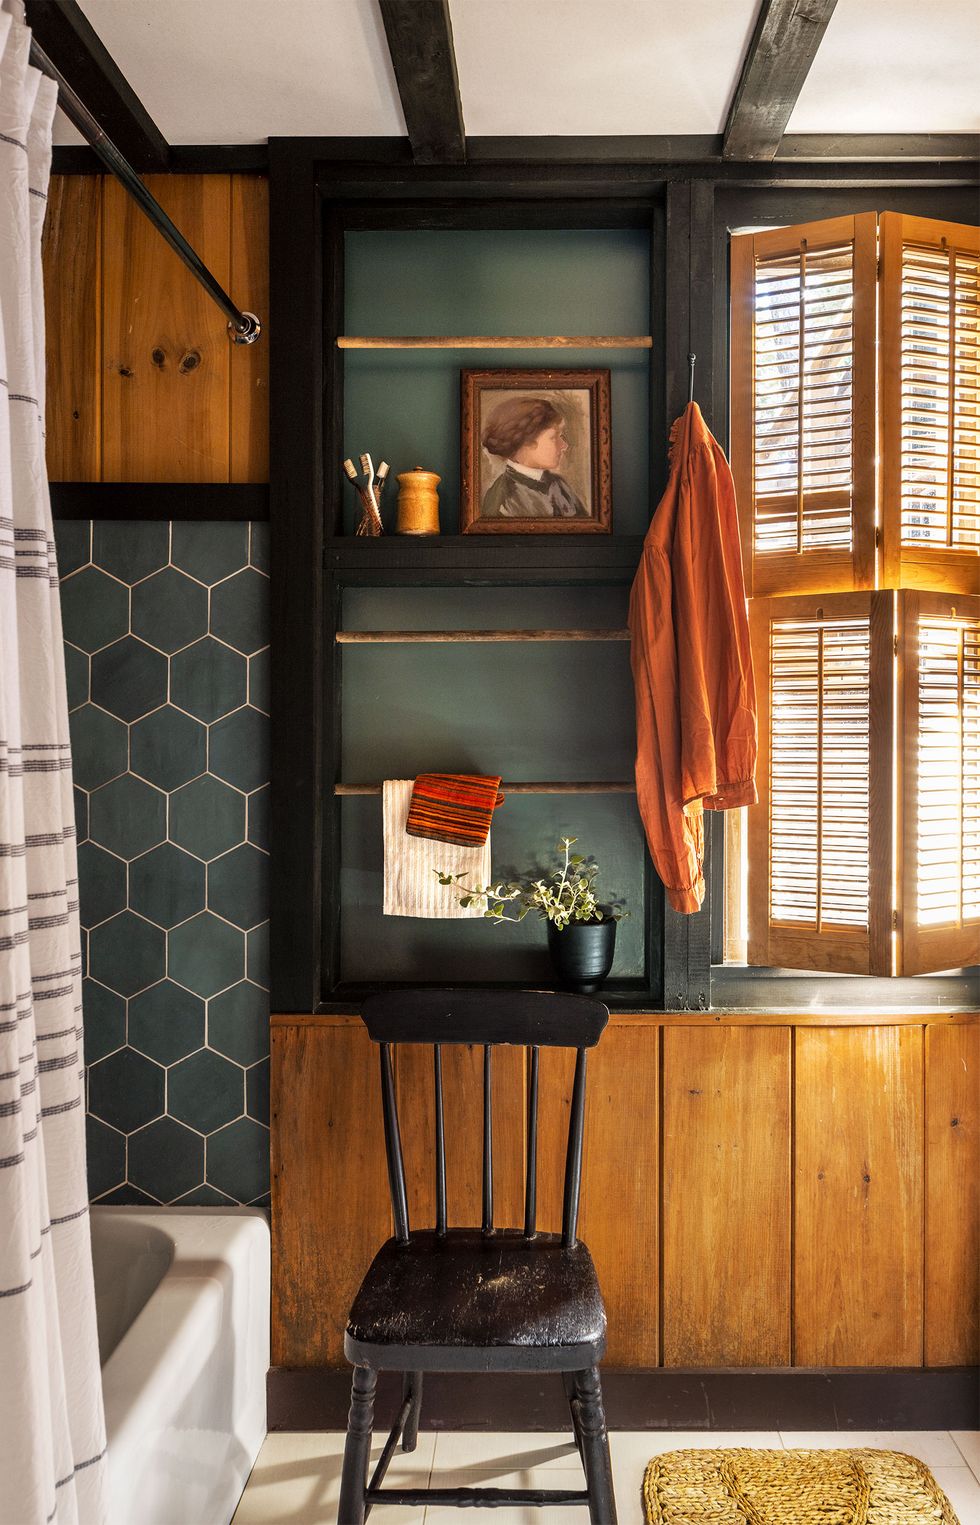 Transform Your Bath Space with Rustic Cabin Lodge Bathroom Decor